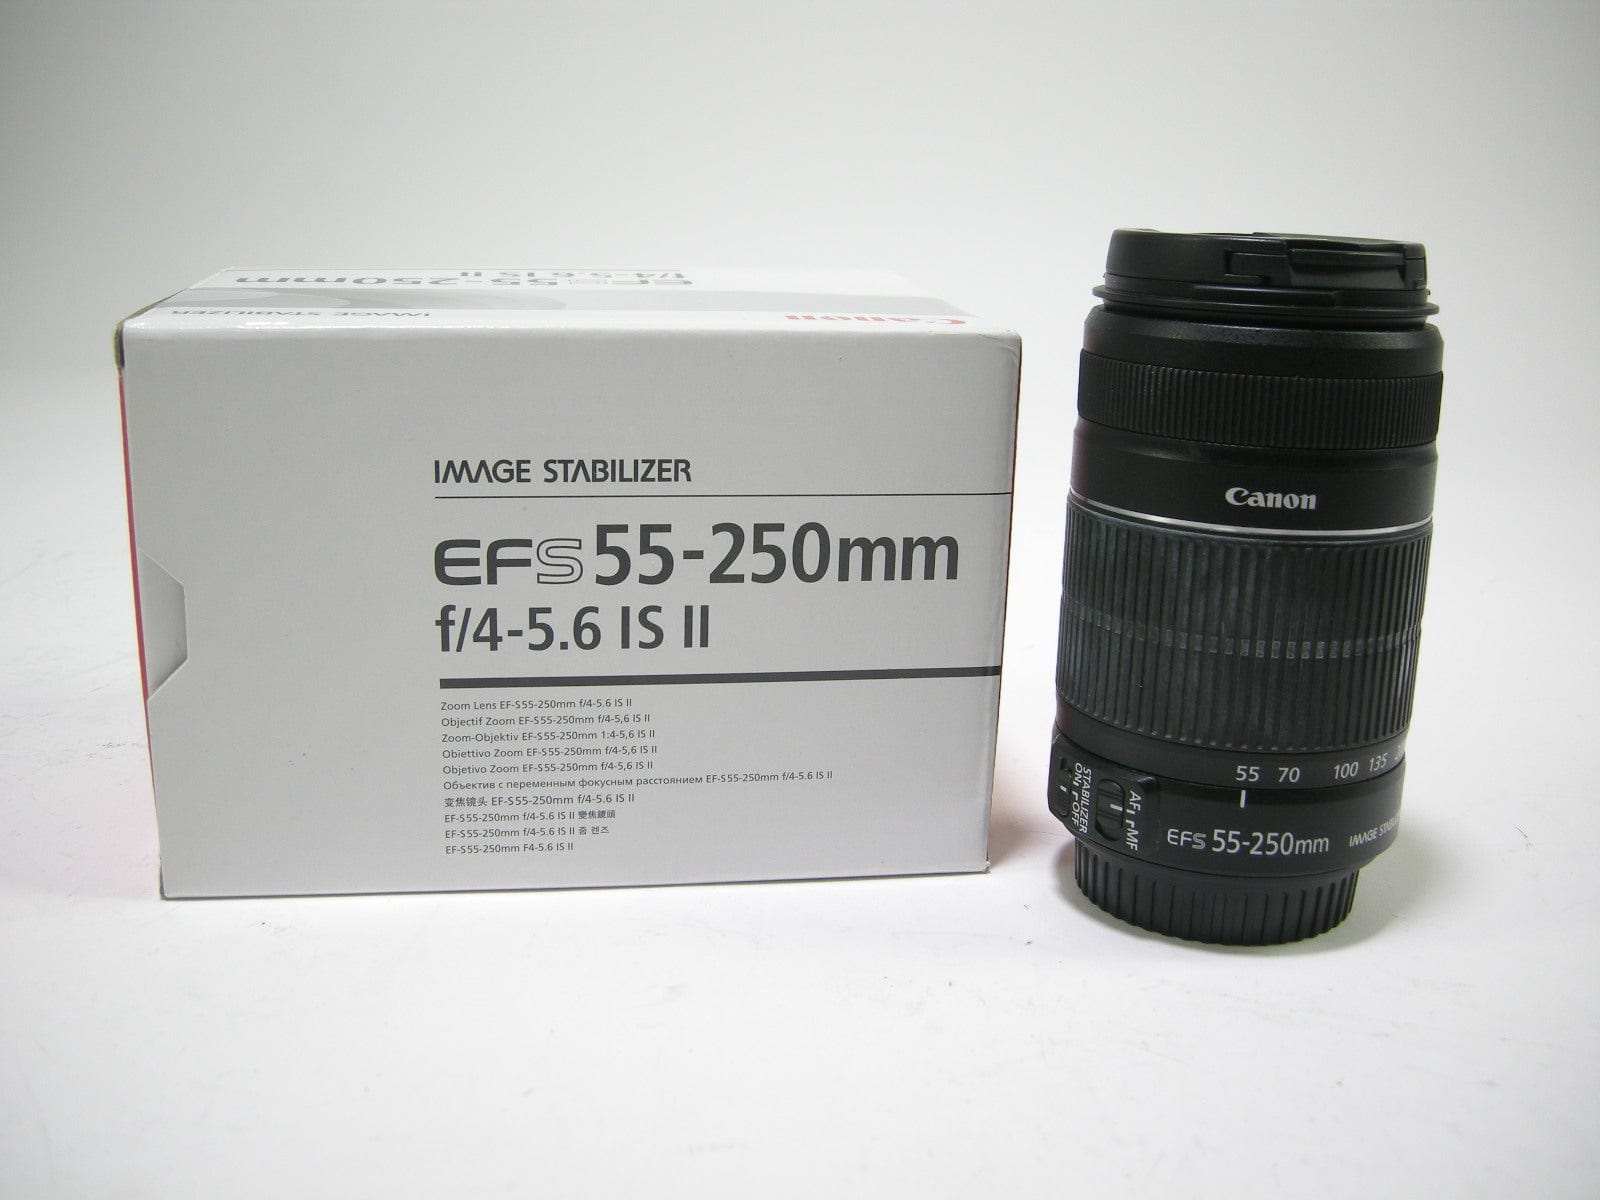 Canon EF-S 55-250mm f4-5.6 IS II lens